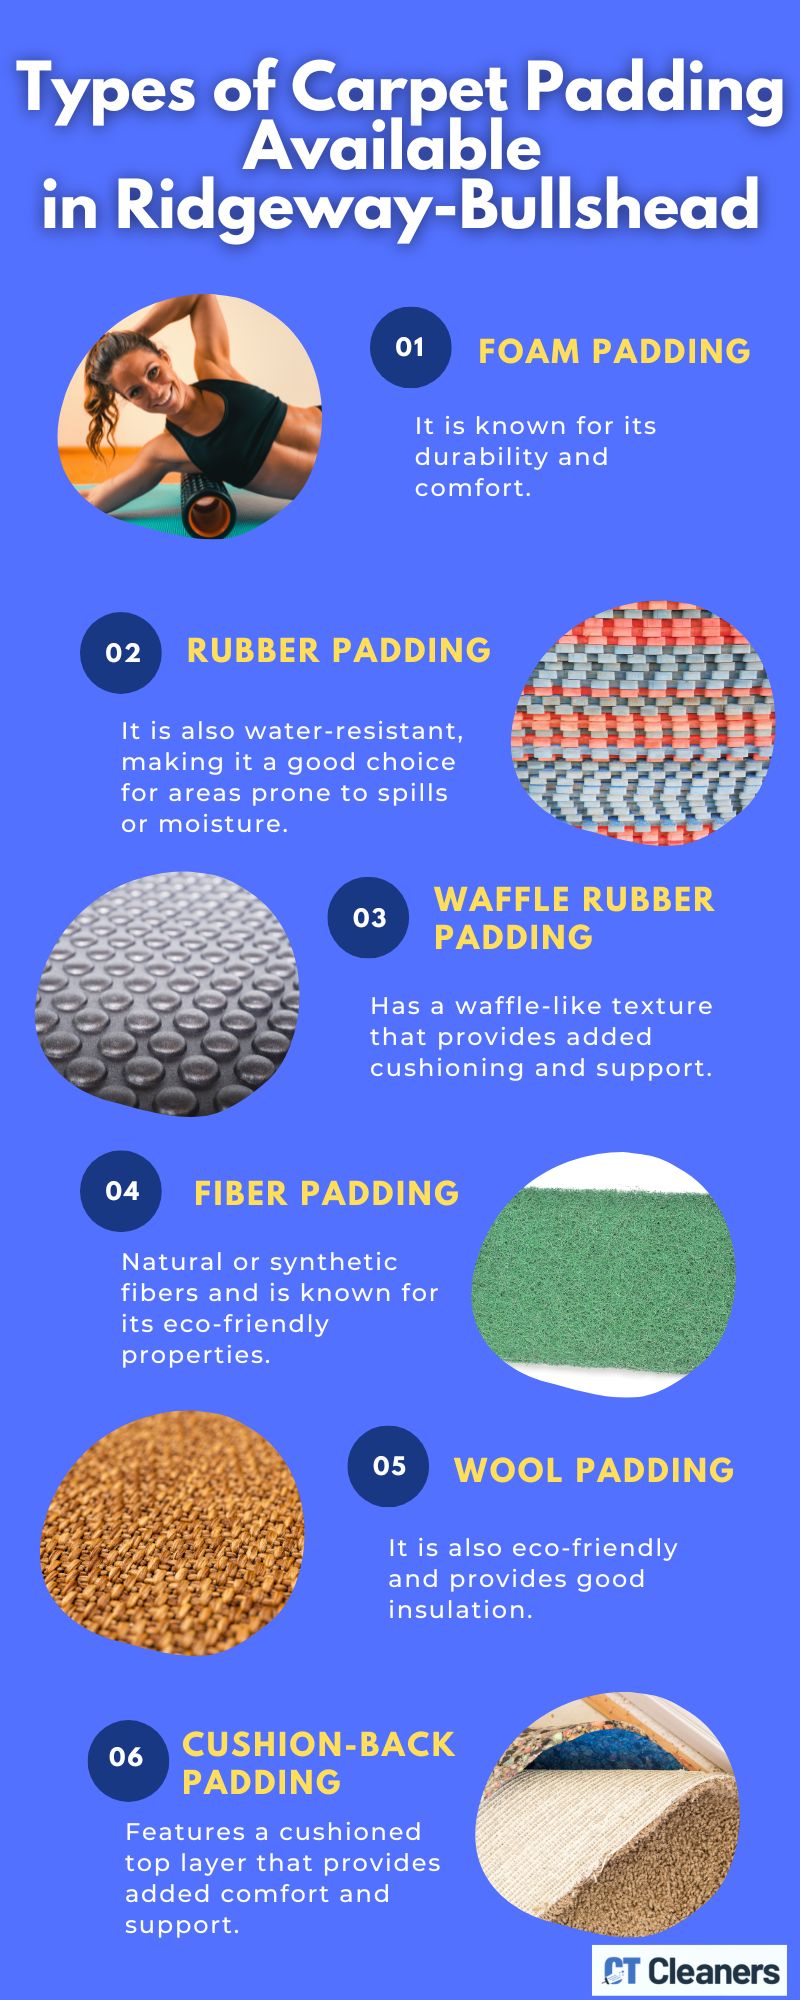 Types of Carpet Padding Available in Ridgeway-Bullshead